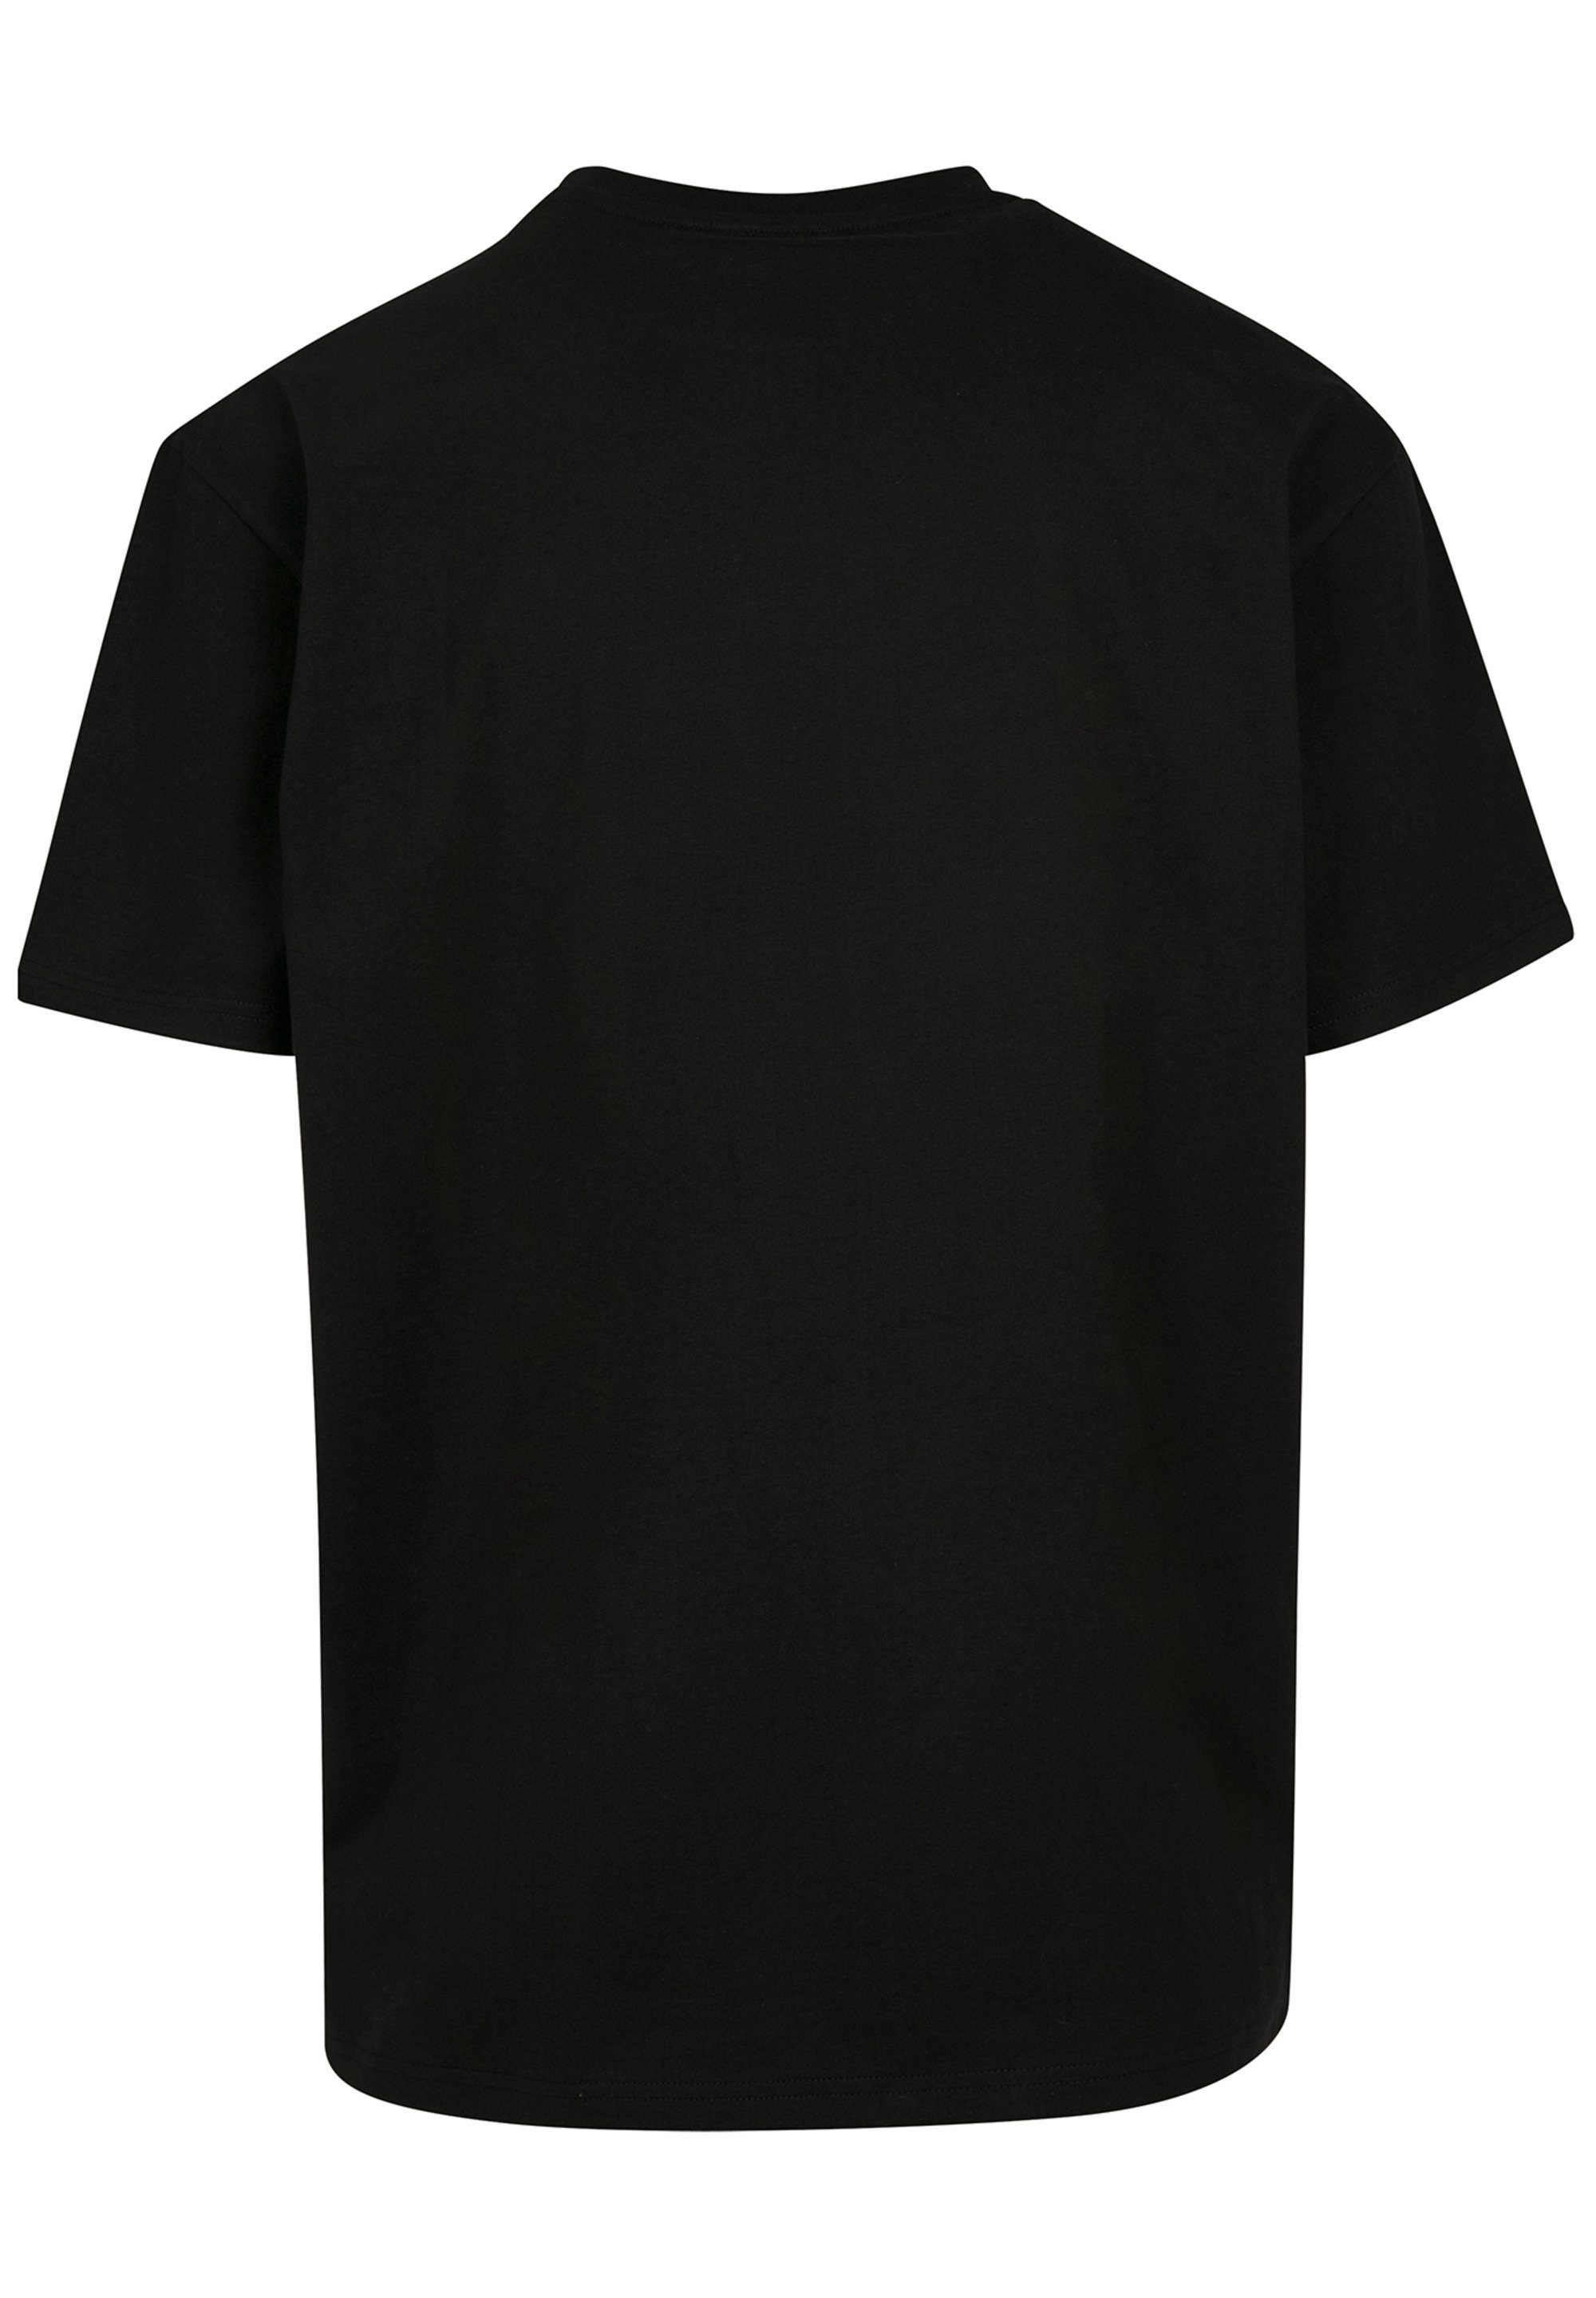 T-Shirt Print F4NT4STIC Roses Vintage Black Band (Distressed) Logo Guns schwarz Classic 'n'